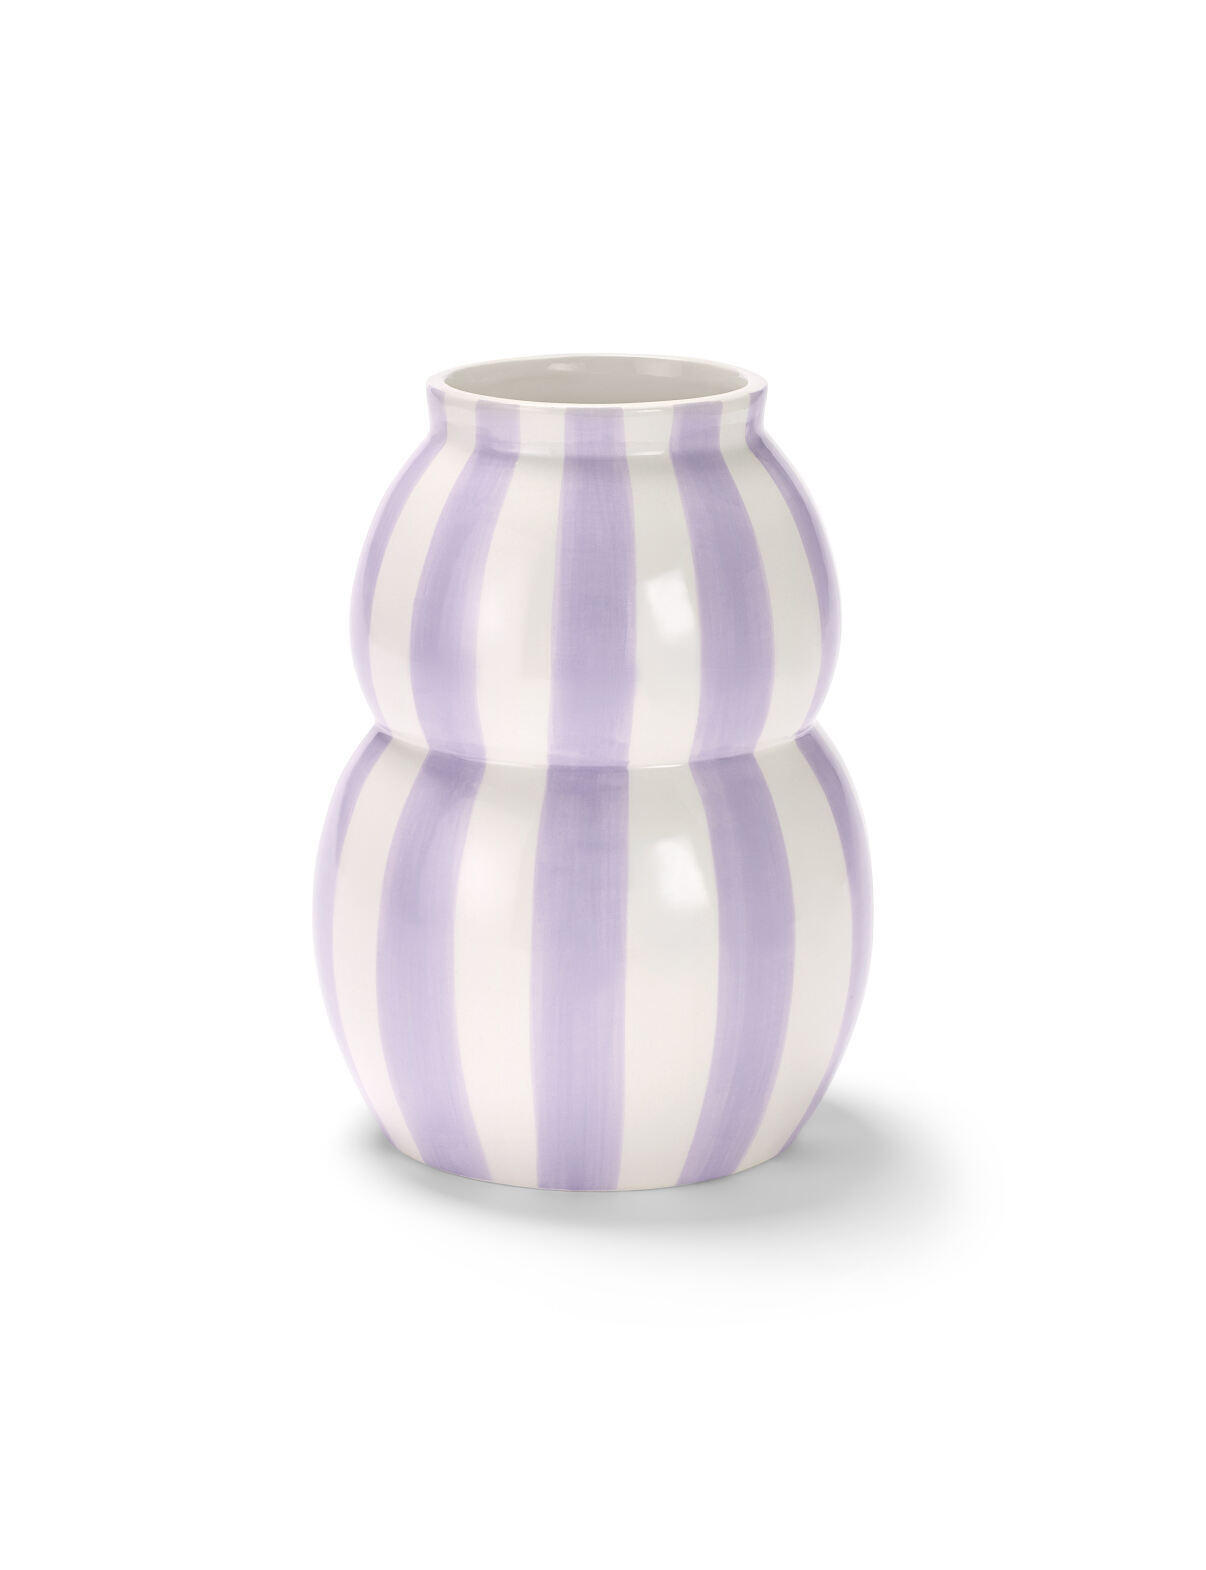 136145 Vase Keramik FS 1 10.24